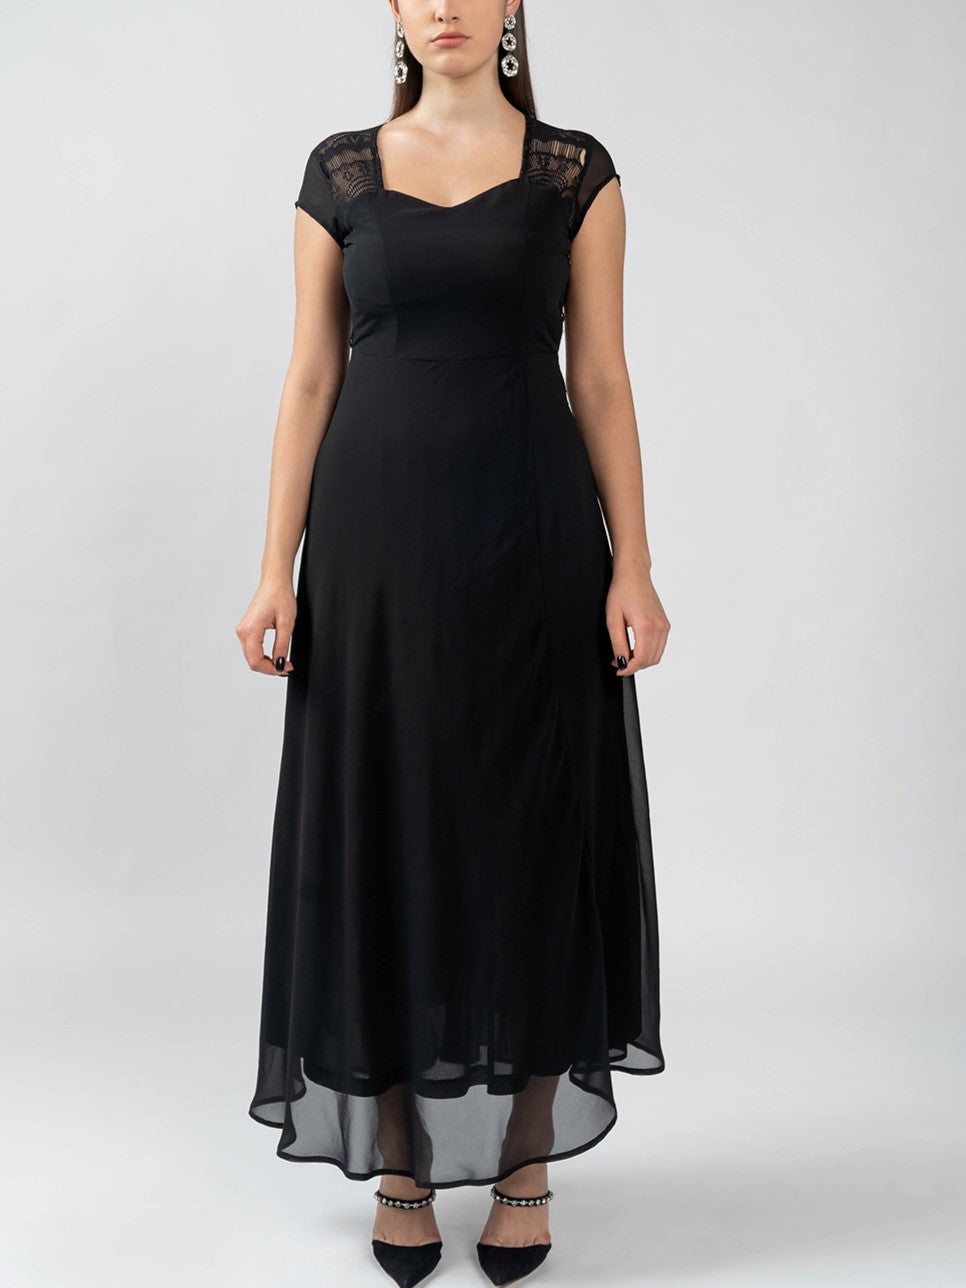 Classy Lace Black Gown Dress